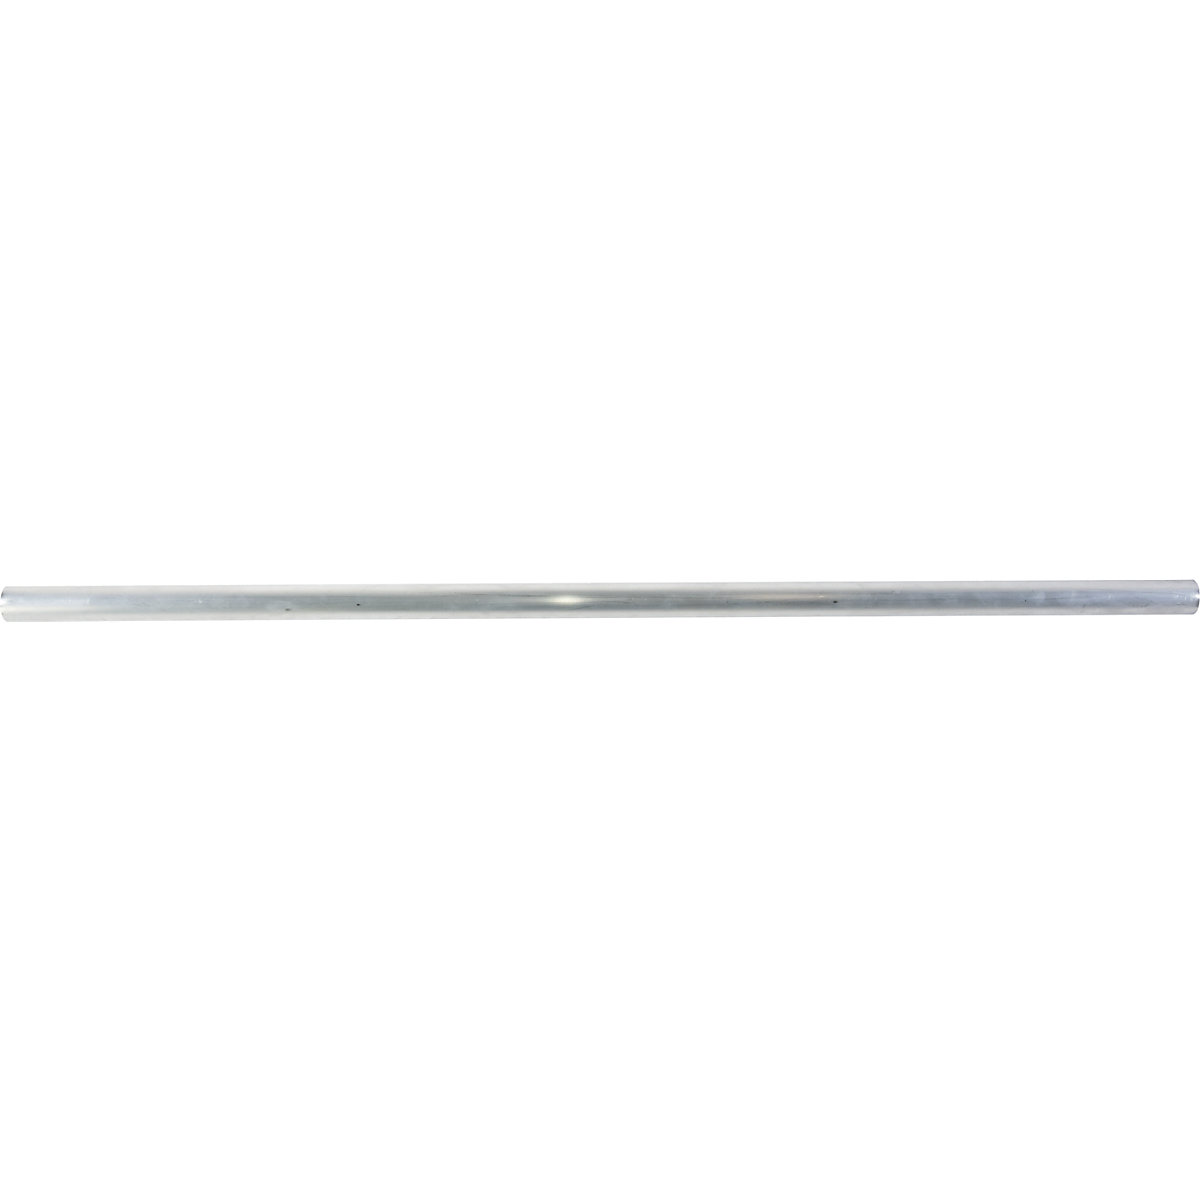 Kolejnicový systém z kruhových trubek – KRAUSE, délka 3000 mm, eloxovaný hliník-4